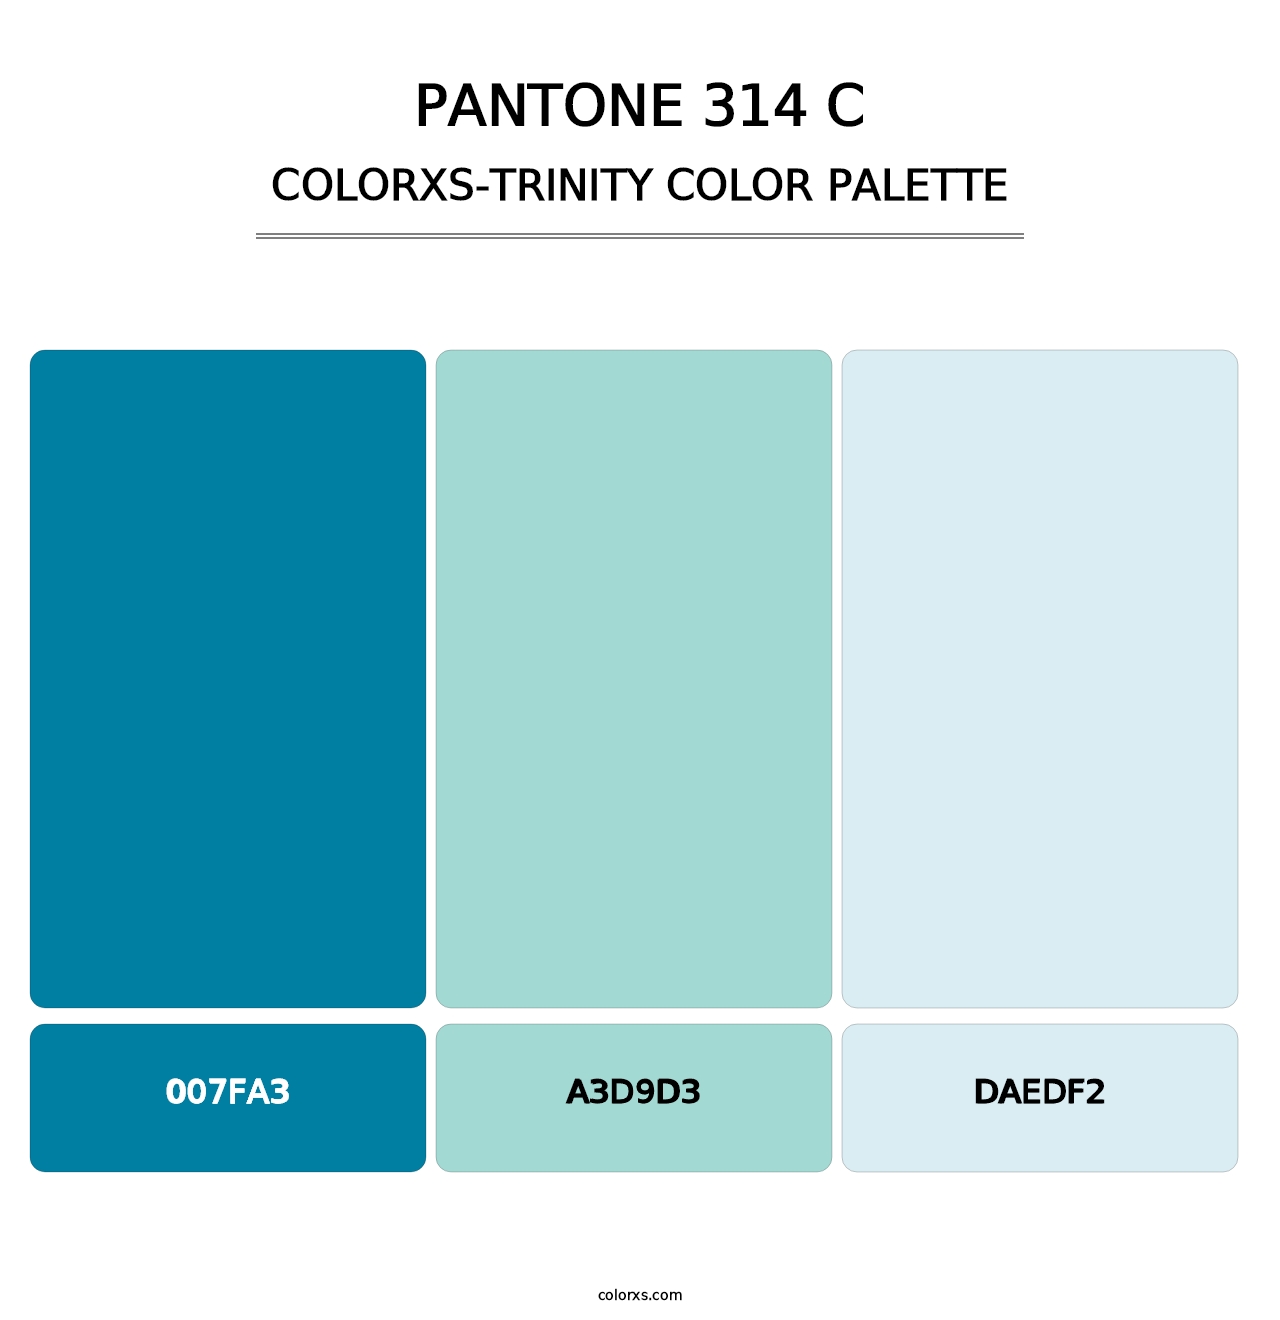 PANTONE 314 C - Colorxs Trinity Palette